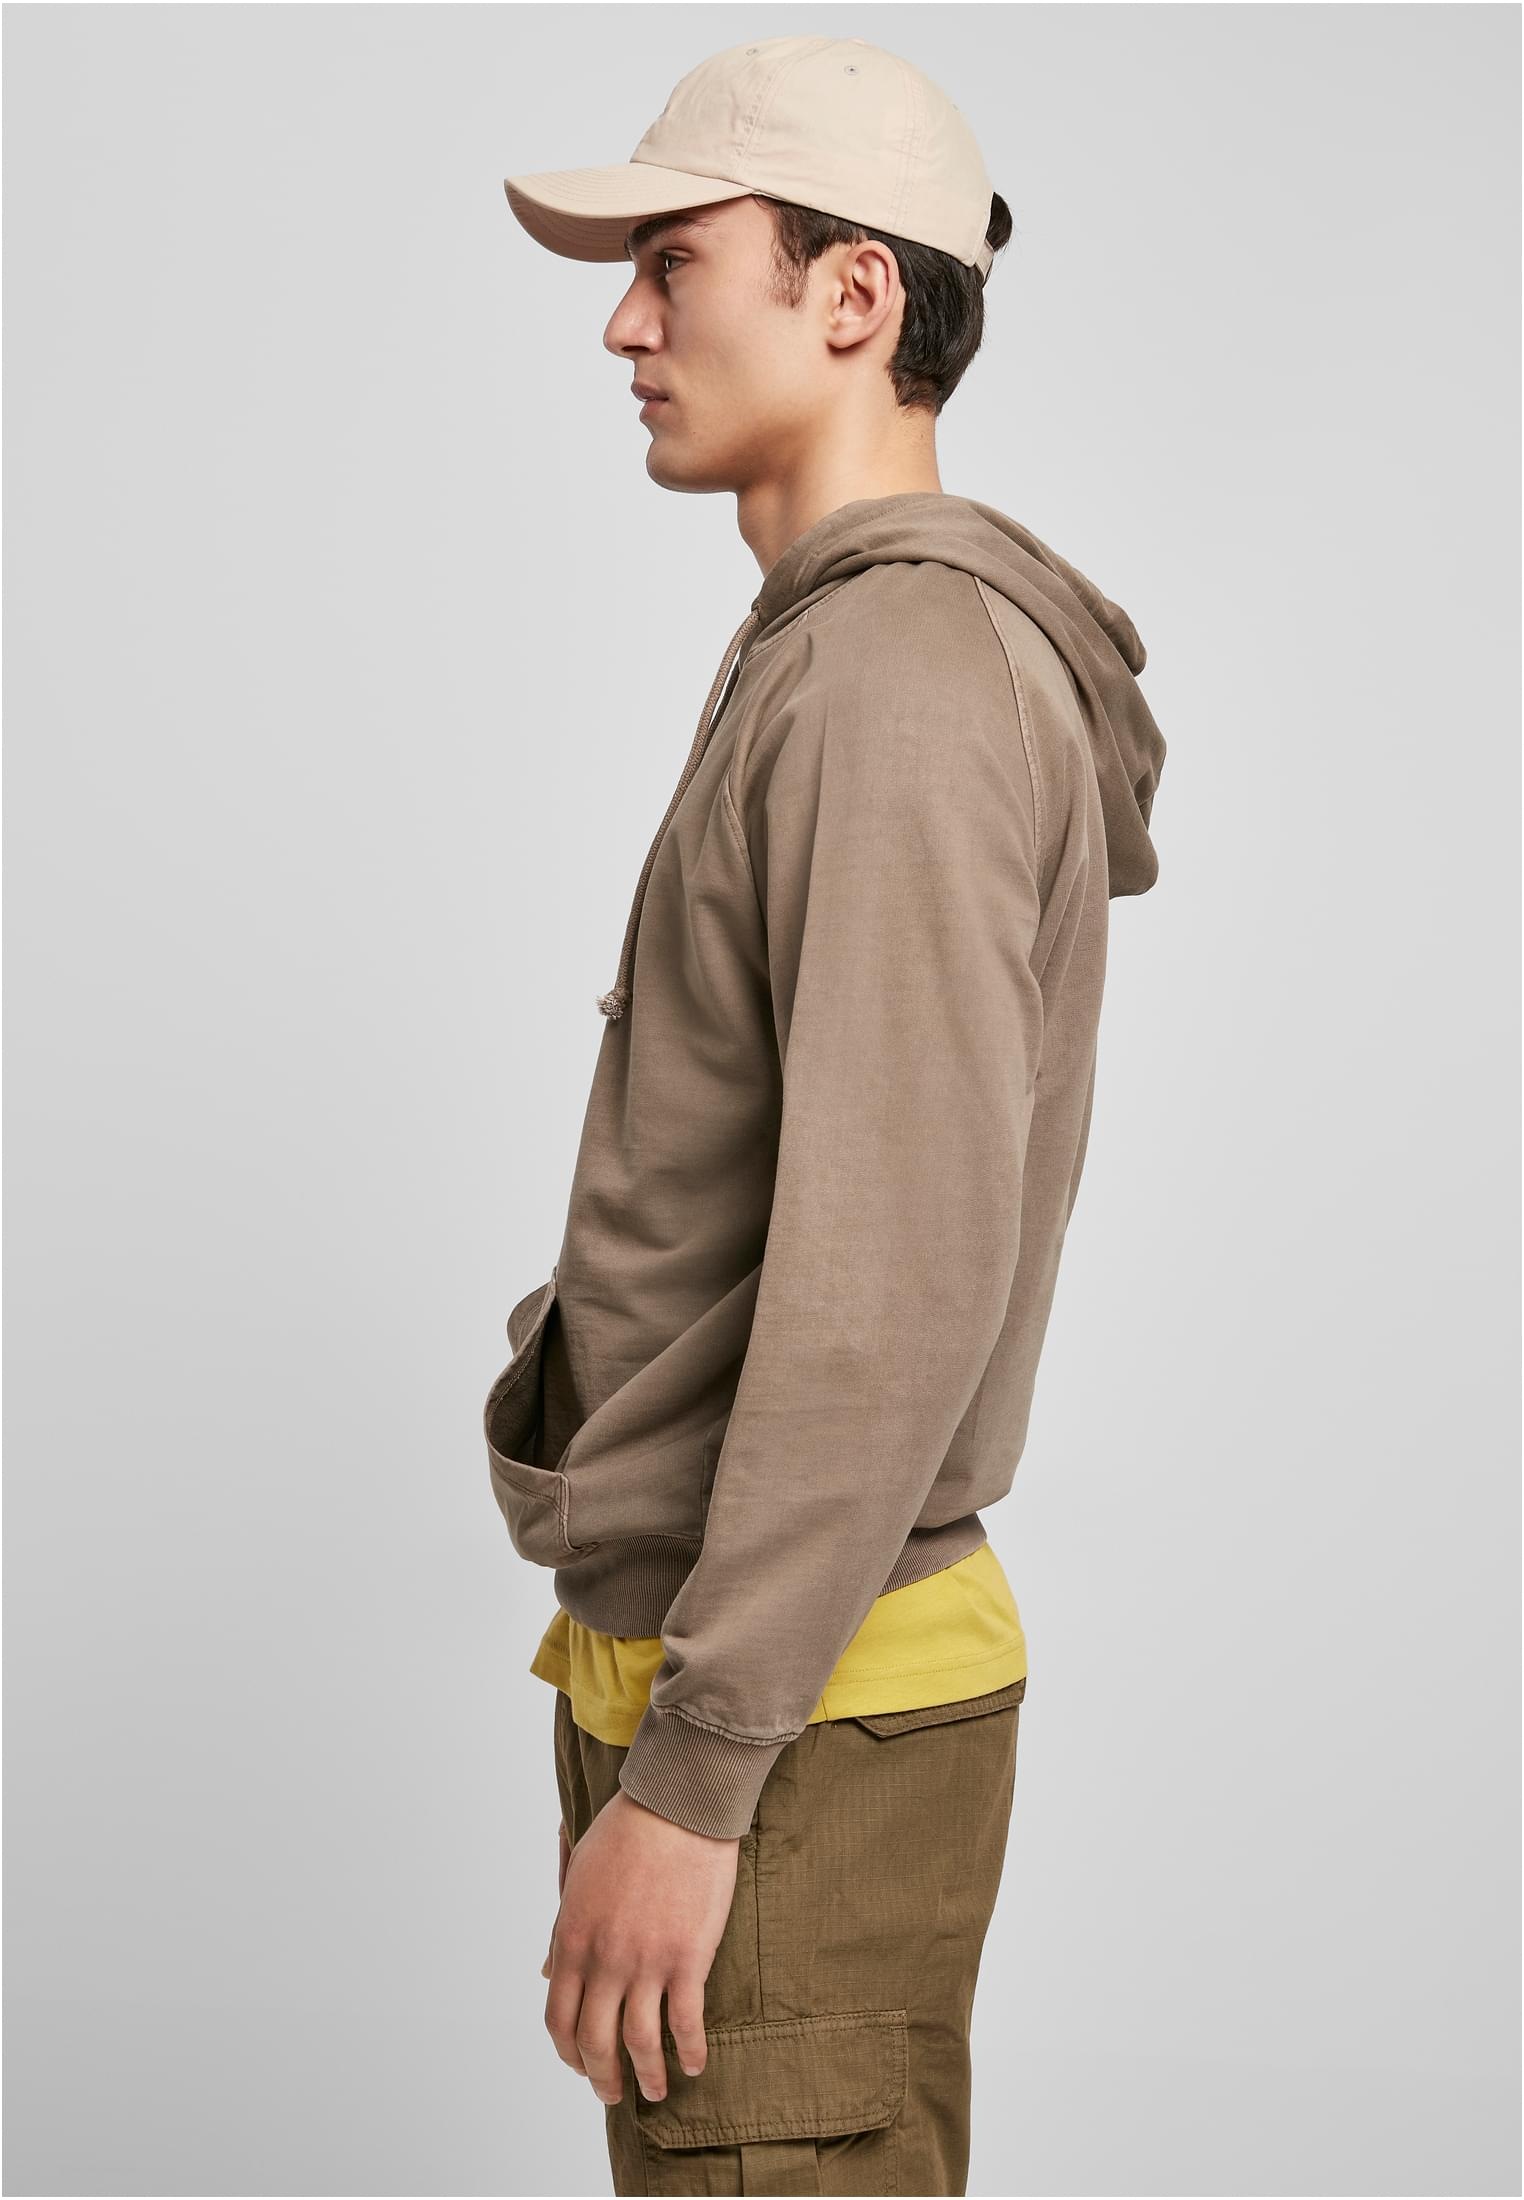 tlg.) kaufen | »Herren BAUR (1 Overdyed Sweater URBAN ▷ Hoody«, CLASSICS